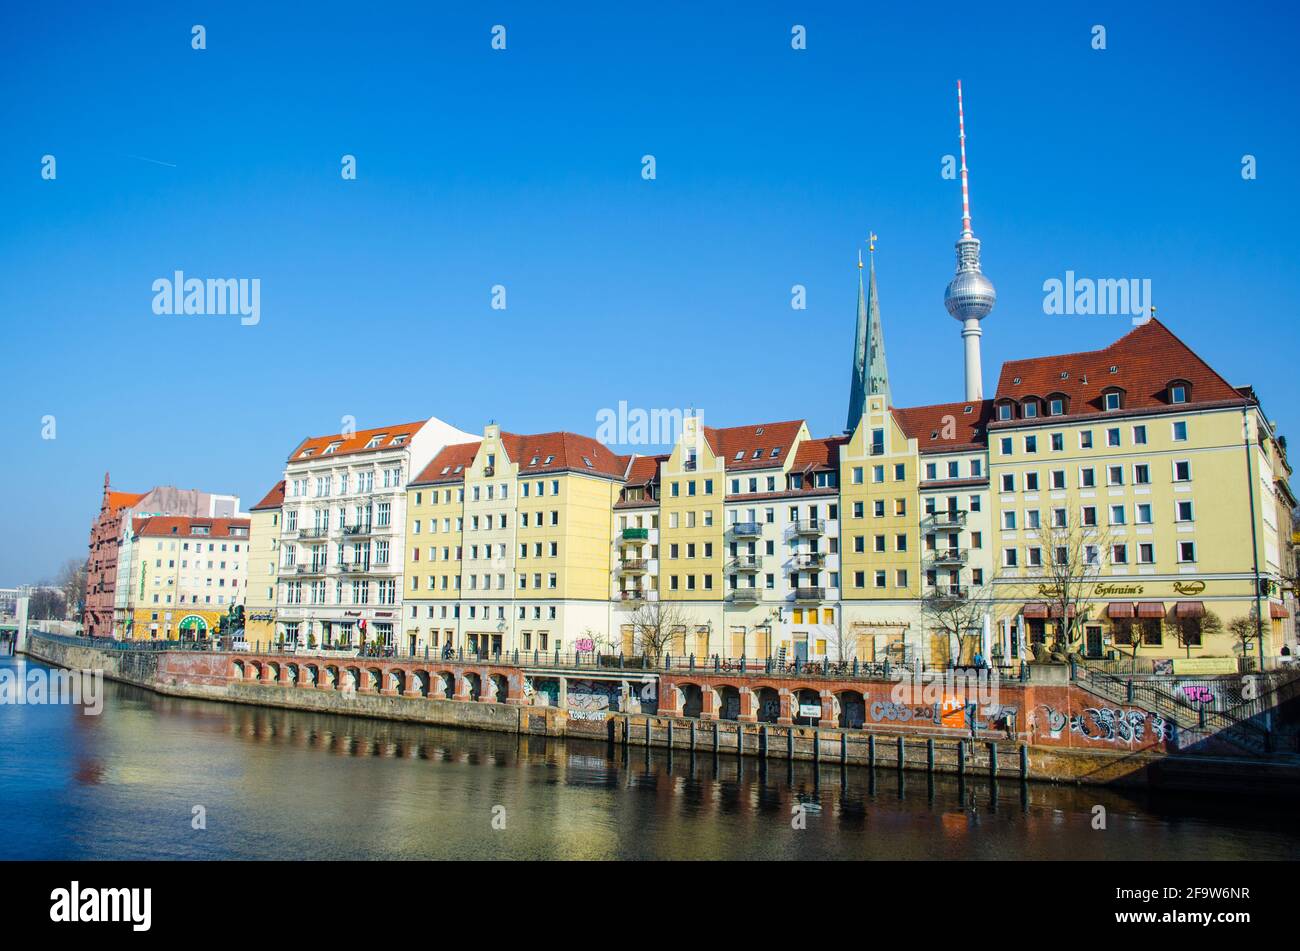 BERLIN, 12. MÄRZ 2015: Blick auf das Berliner Spree-Ufer mit dem berühmten berliner fernsehturm darüber. Stockfoto